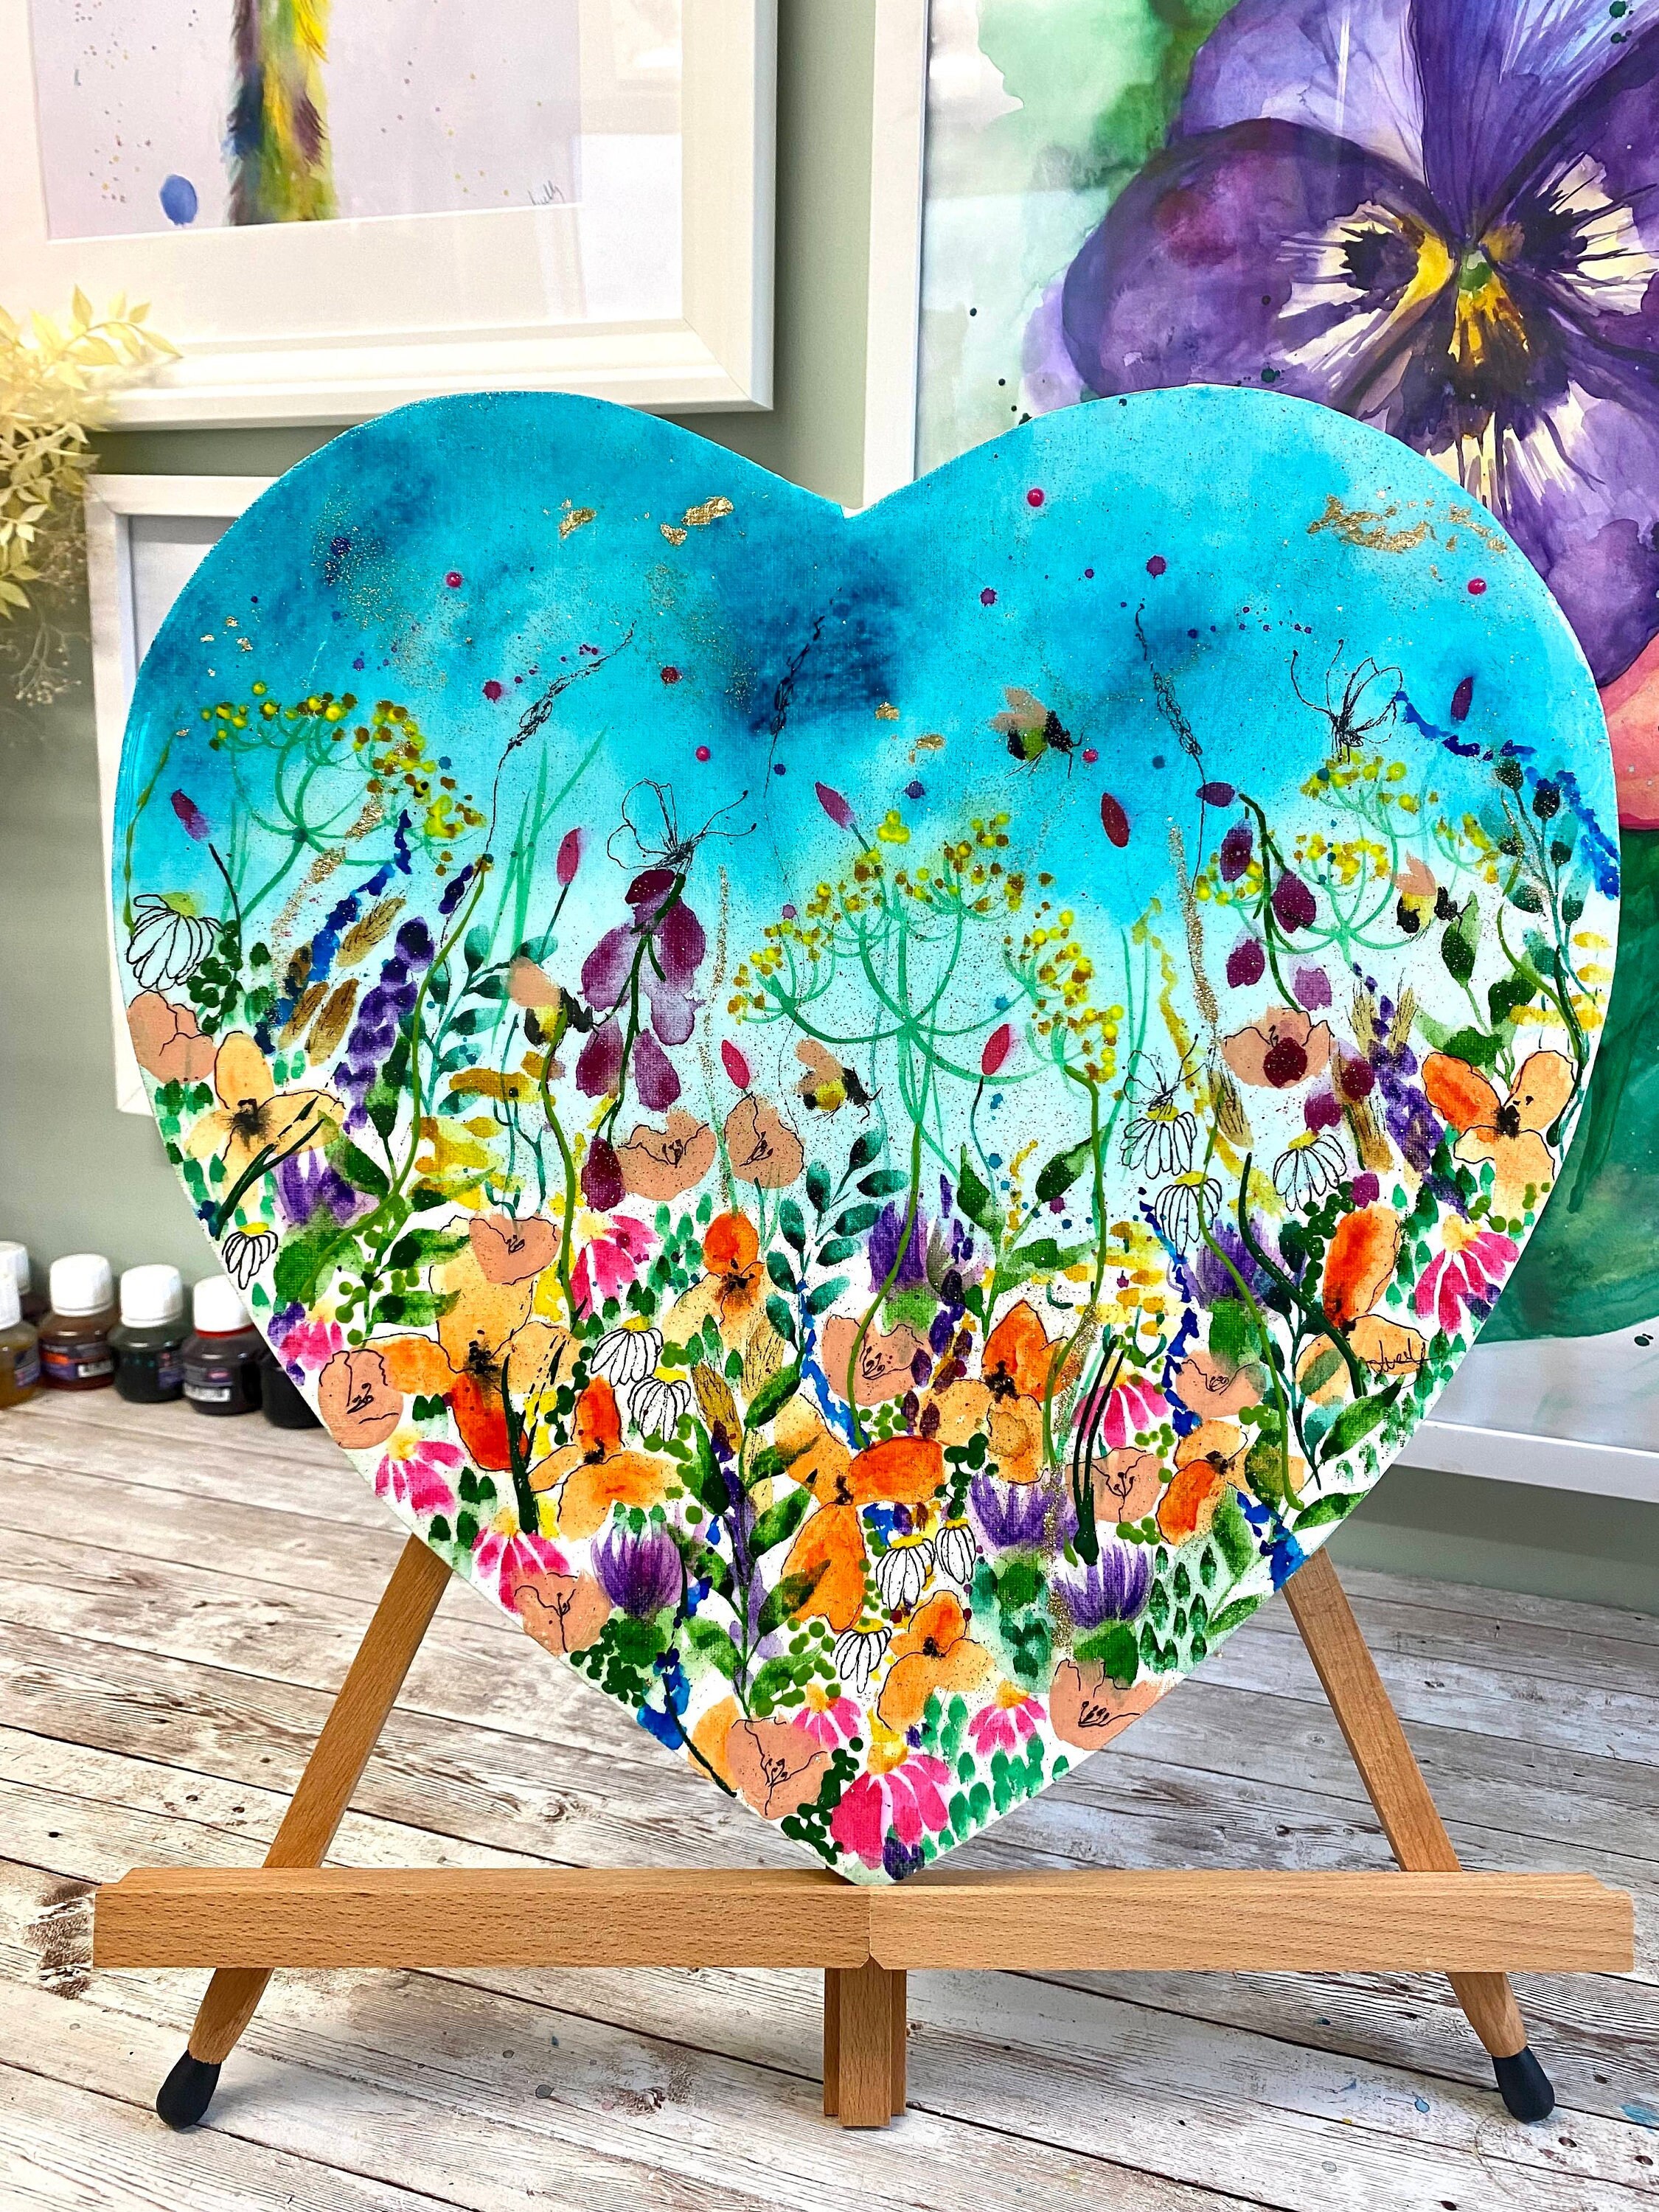 Heart Shape Canvas Painting Ideas For Beginners Artist